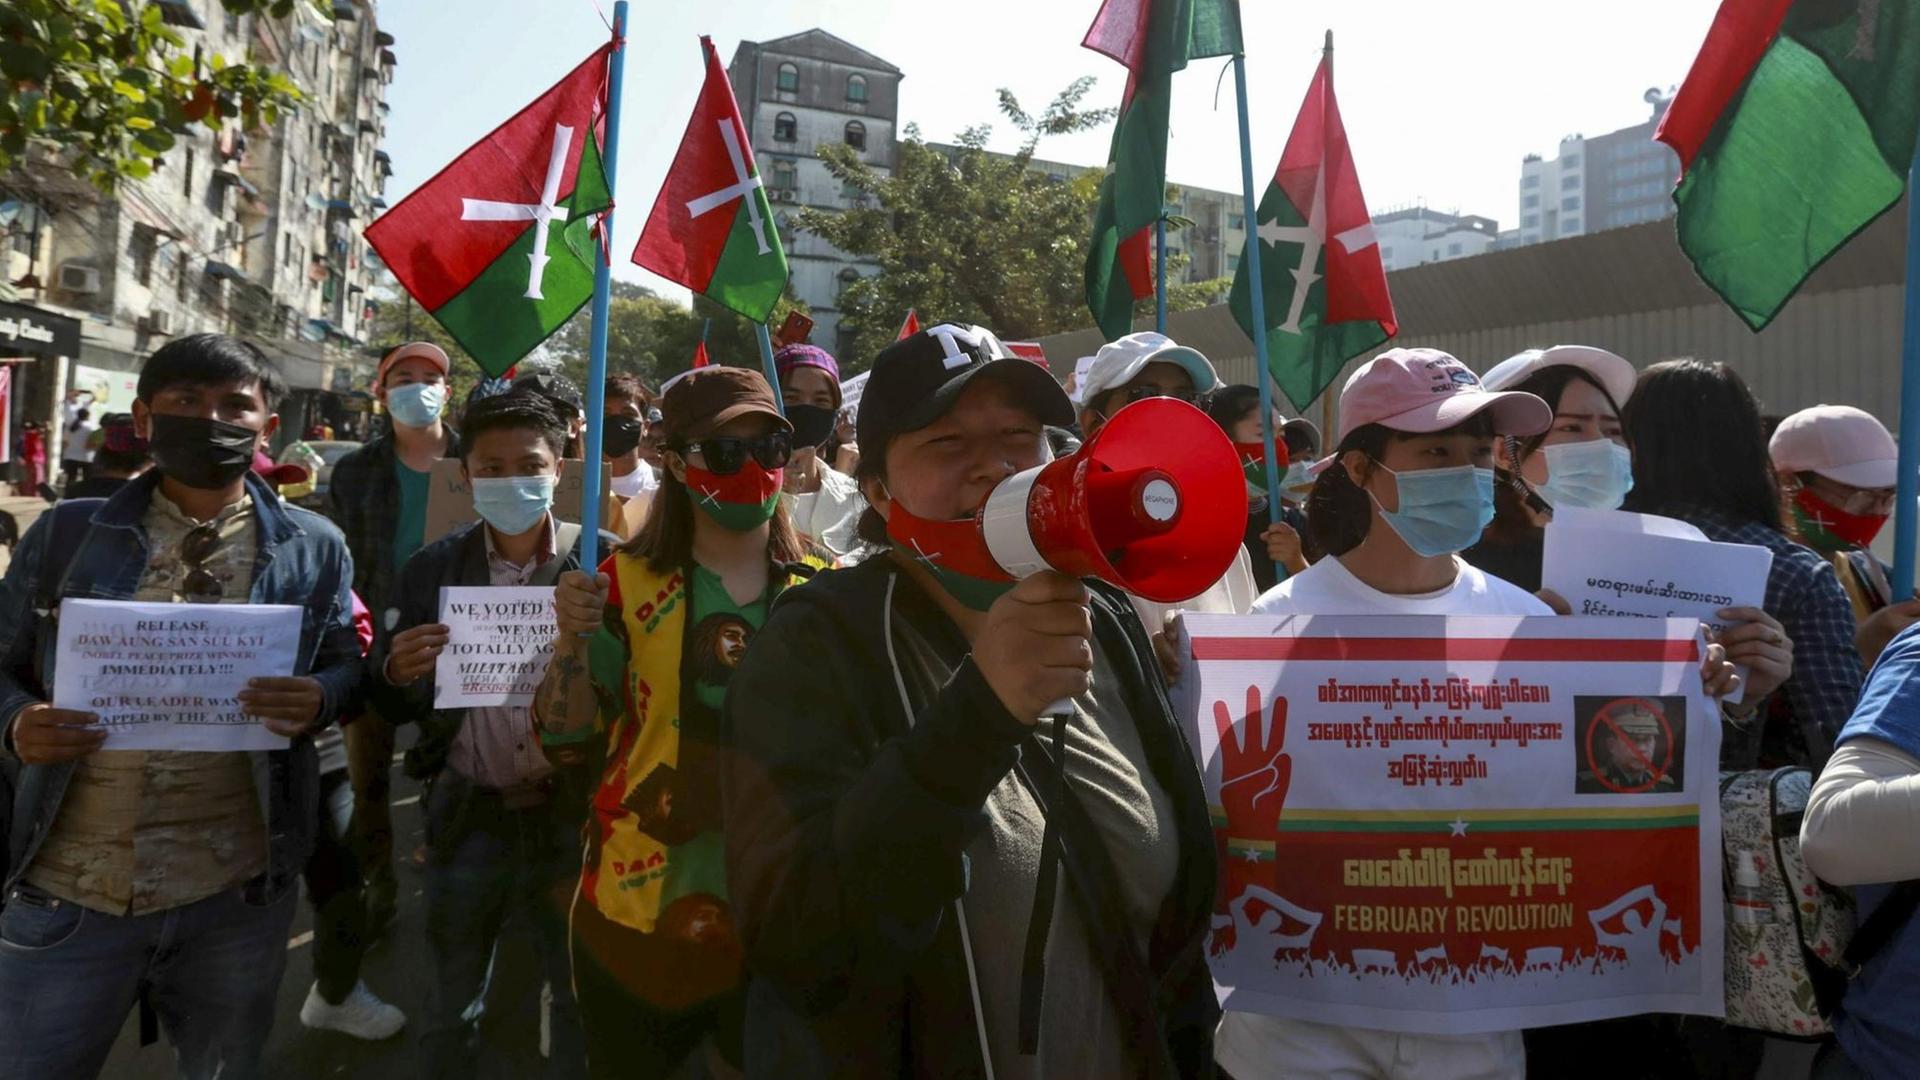 Demonstranten in Yangon, Myanmar mit Plaketen und Lautsprechern.